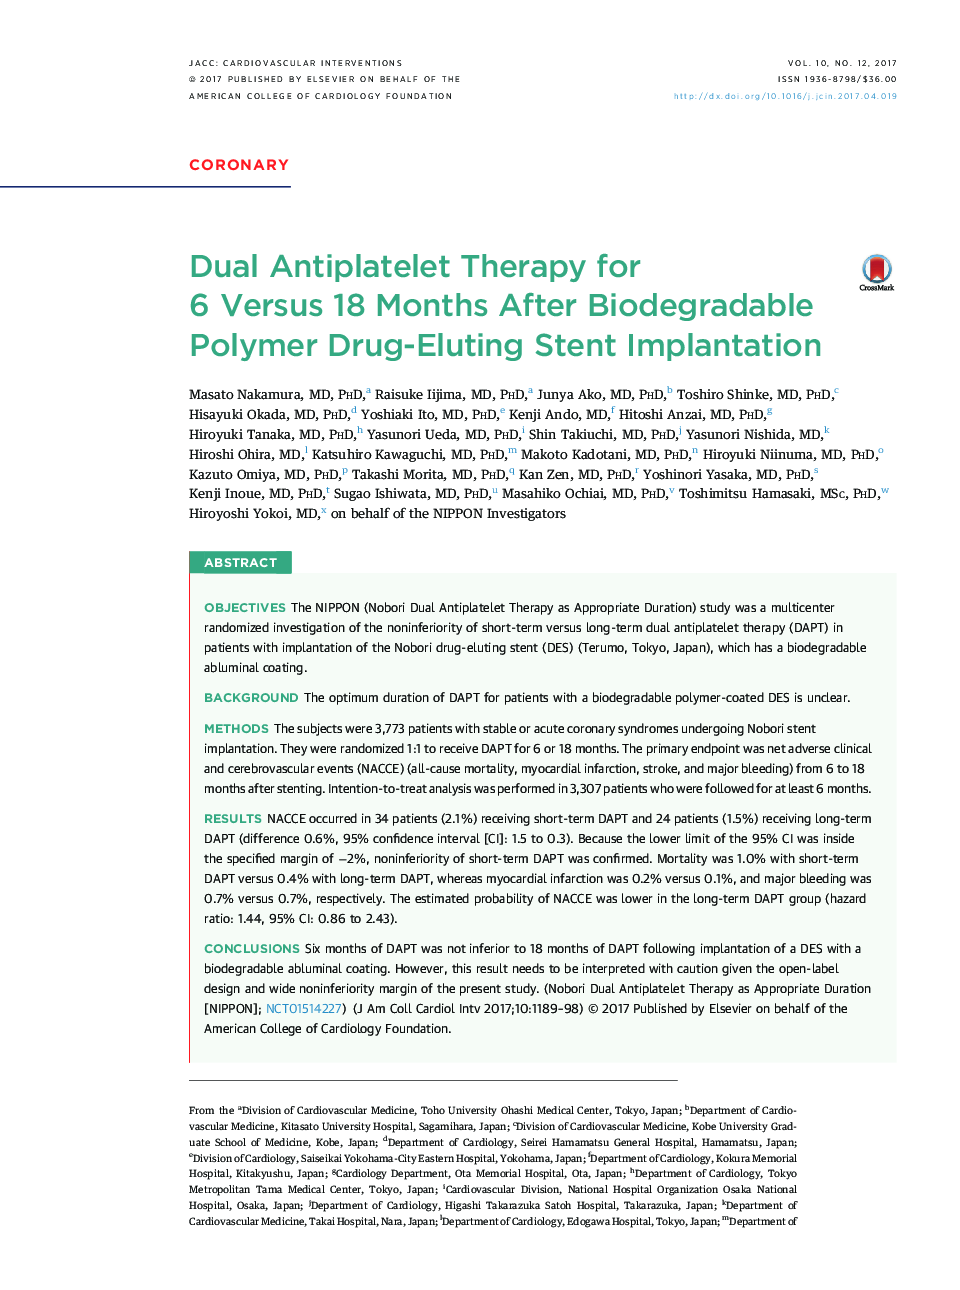 Dual Antiplatelet Therapy for 6 Versus 18Â Months After Biodegradable Polymer Drug-Eluting Stent Implantation